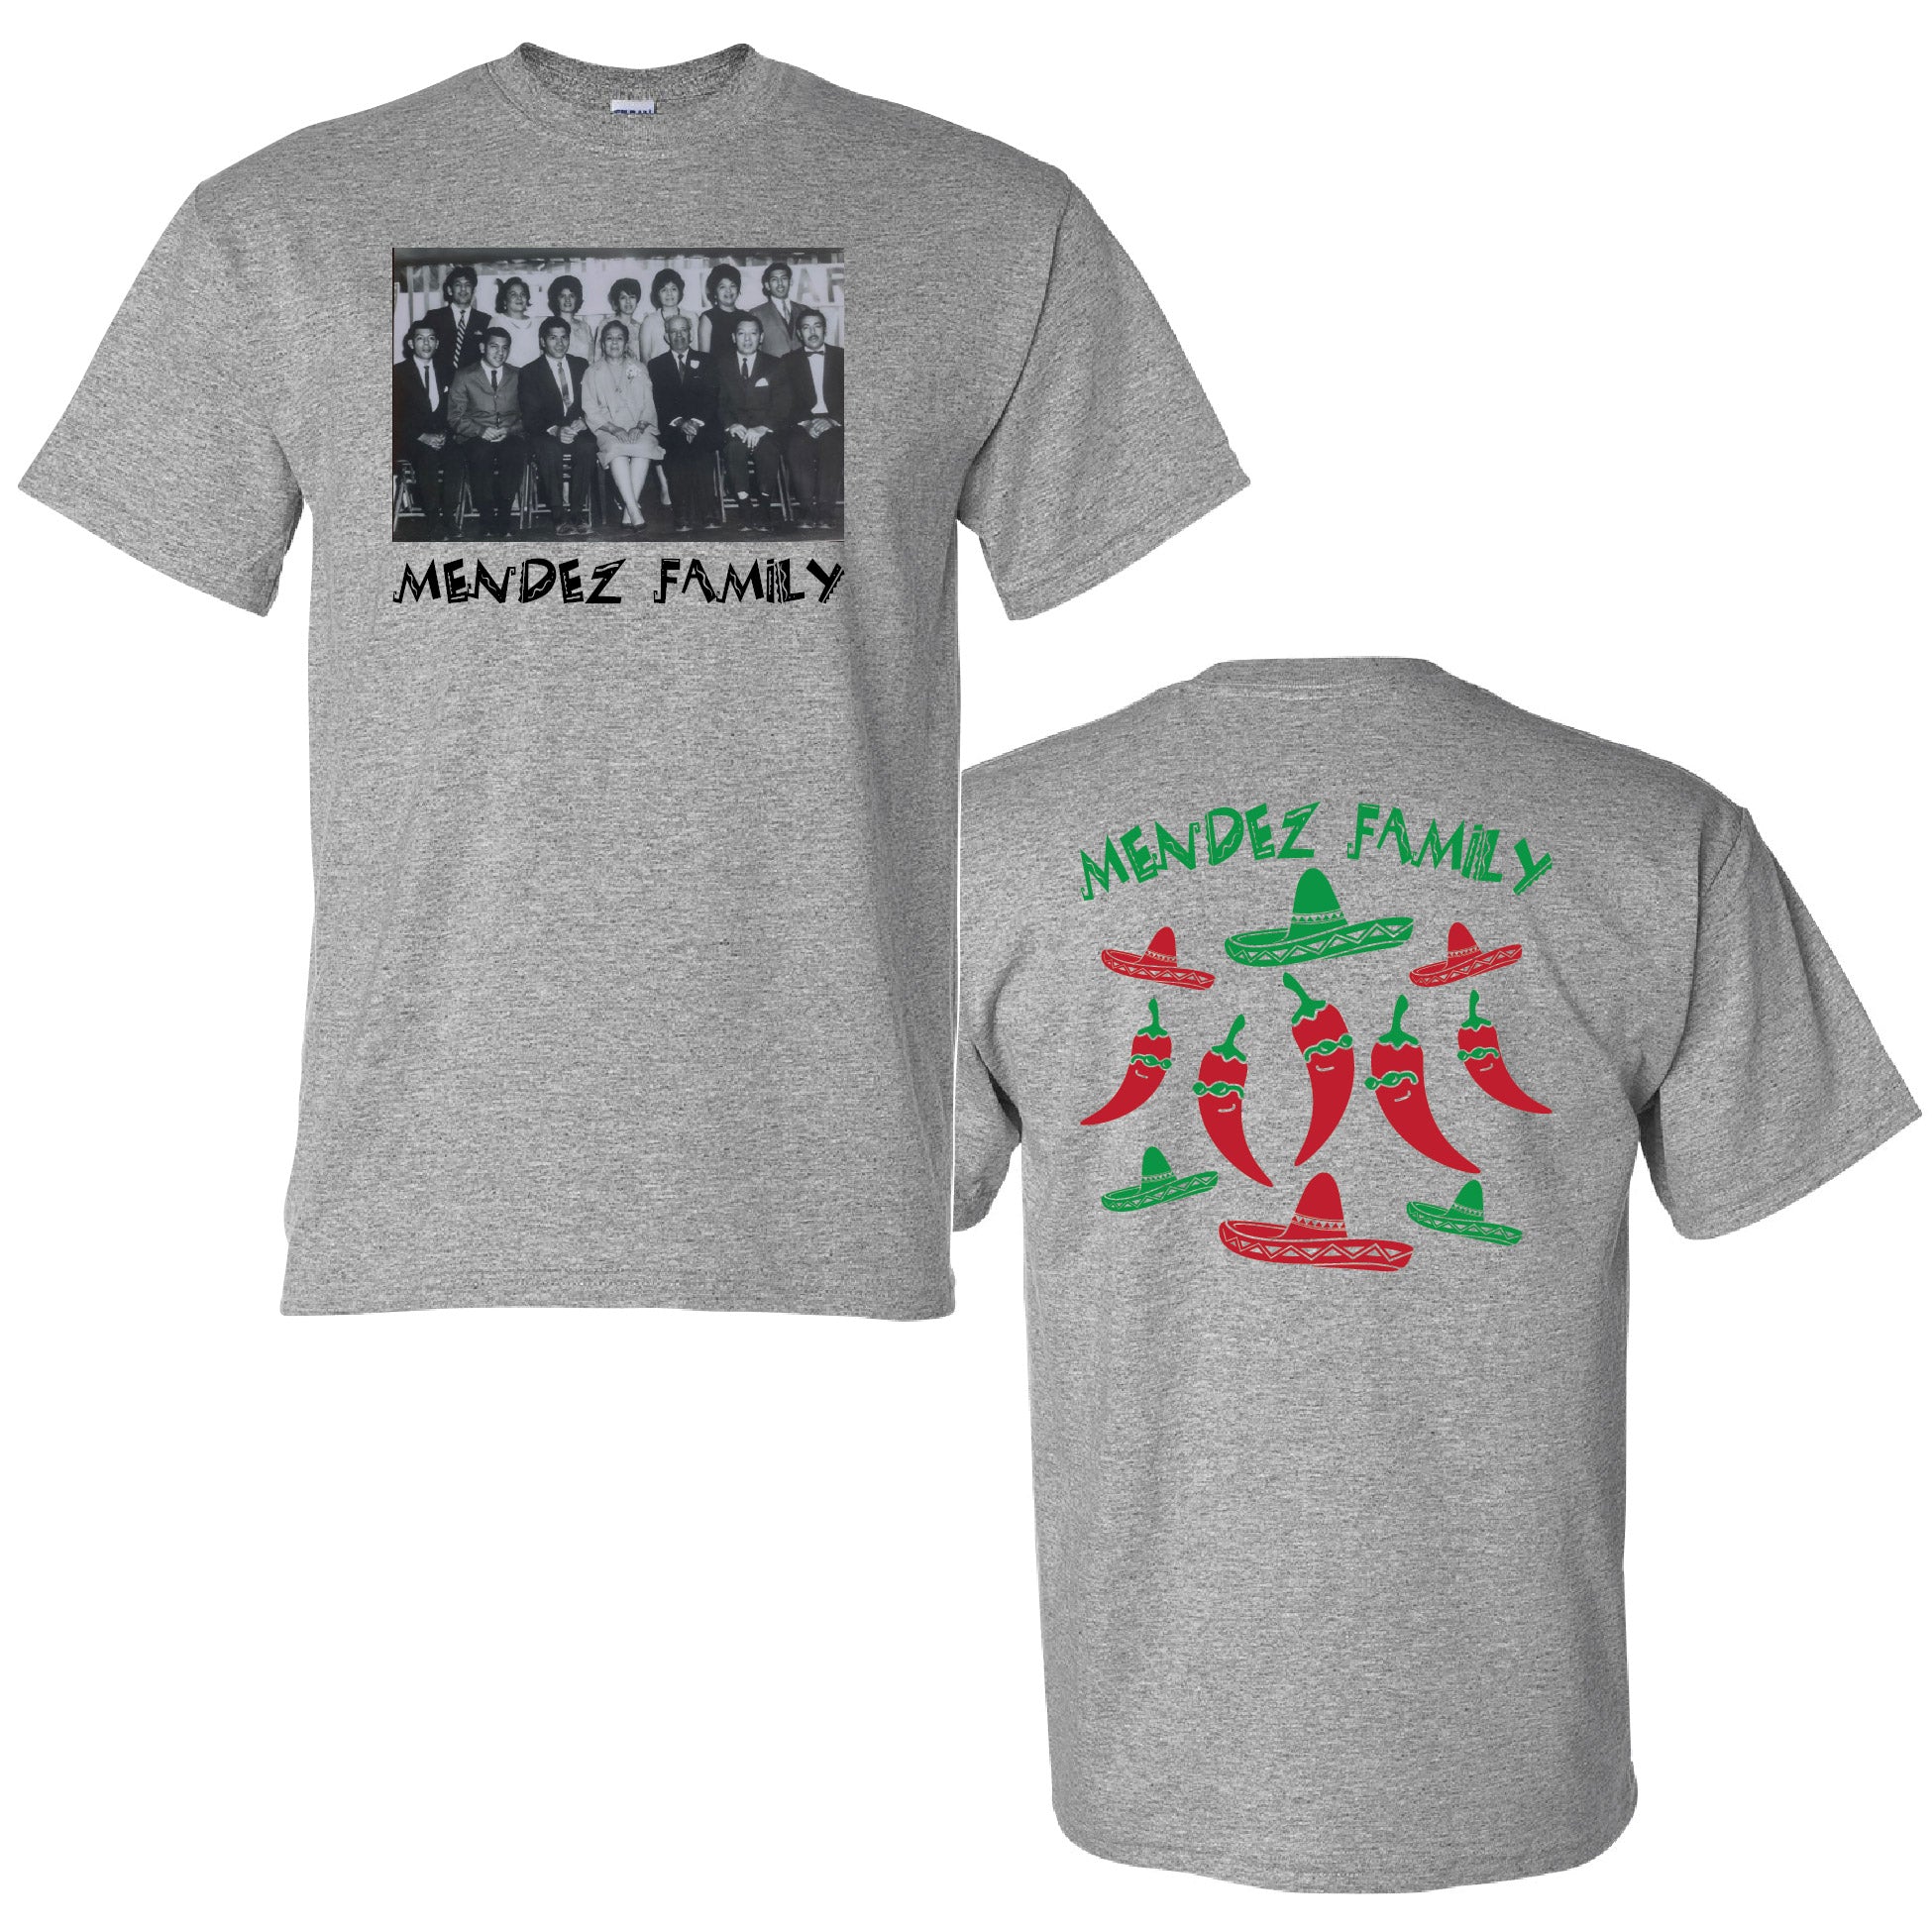 Mendez Family T-Shirt